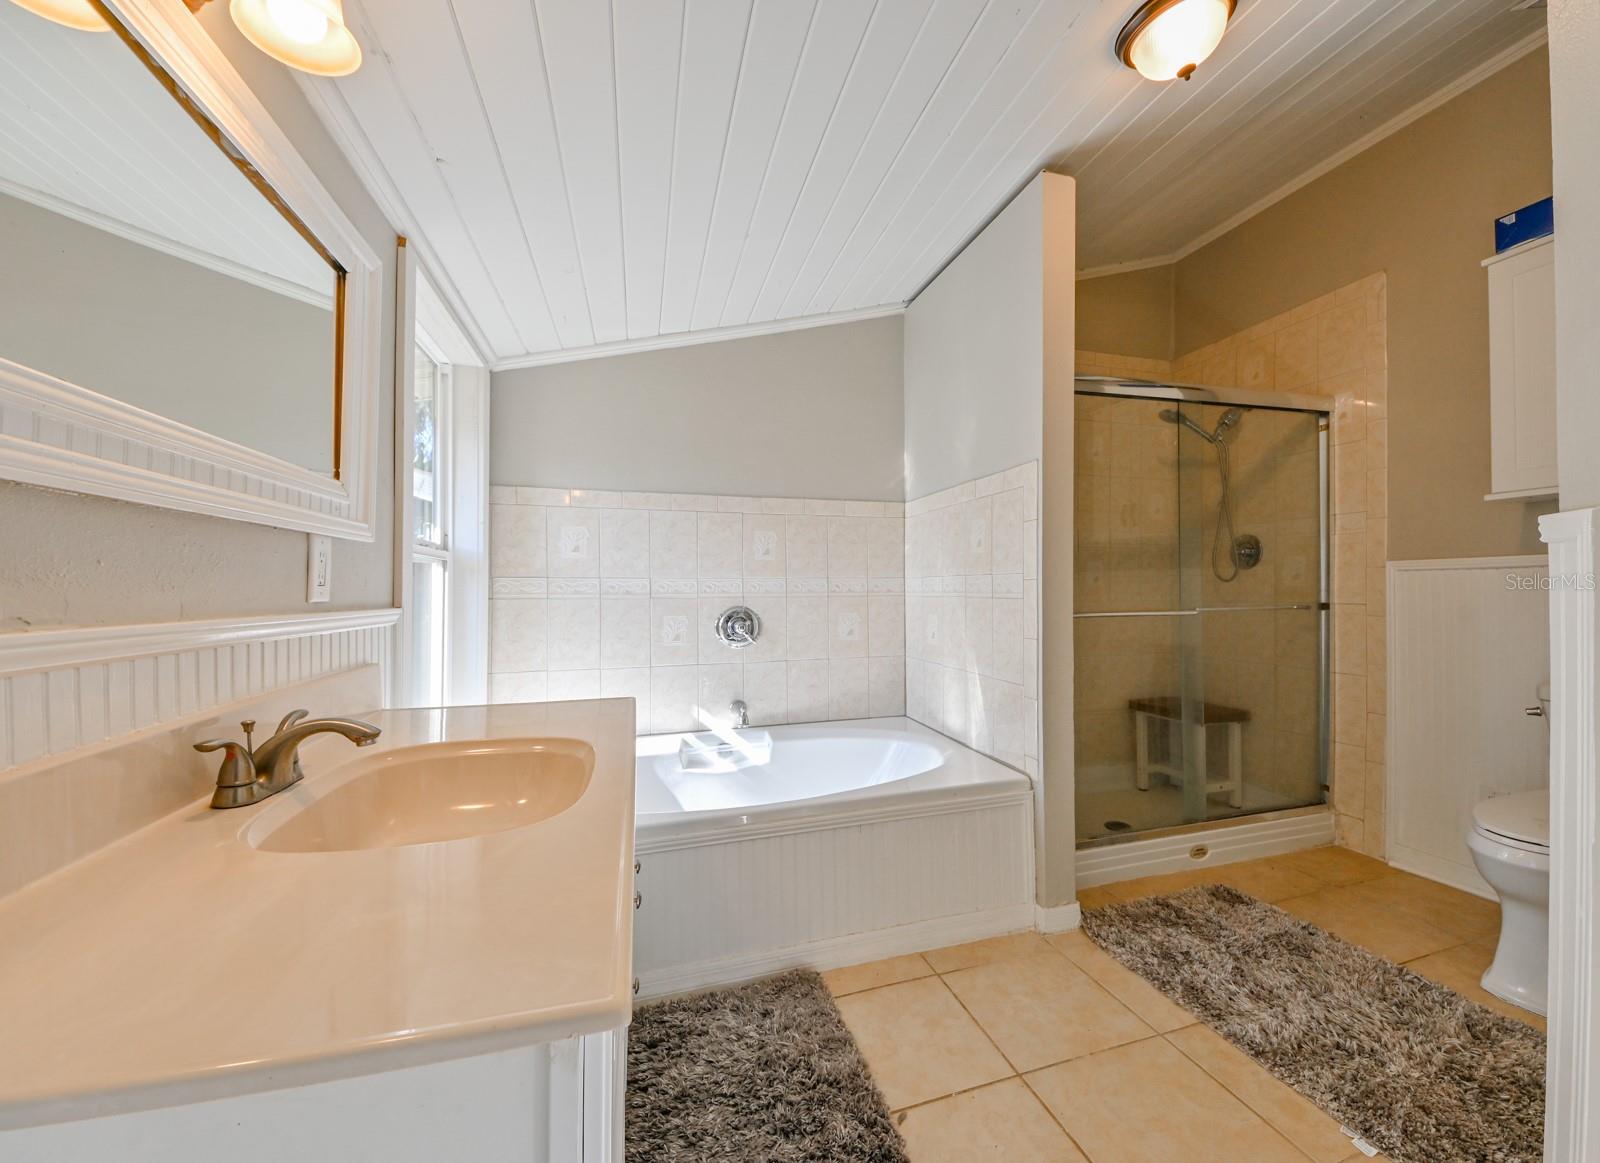 Primary Ensuite Bathroom - Separate Tub & Shower